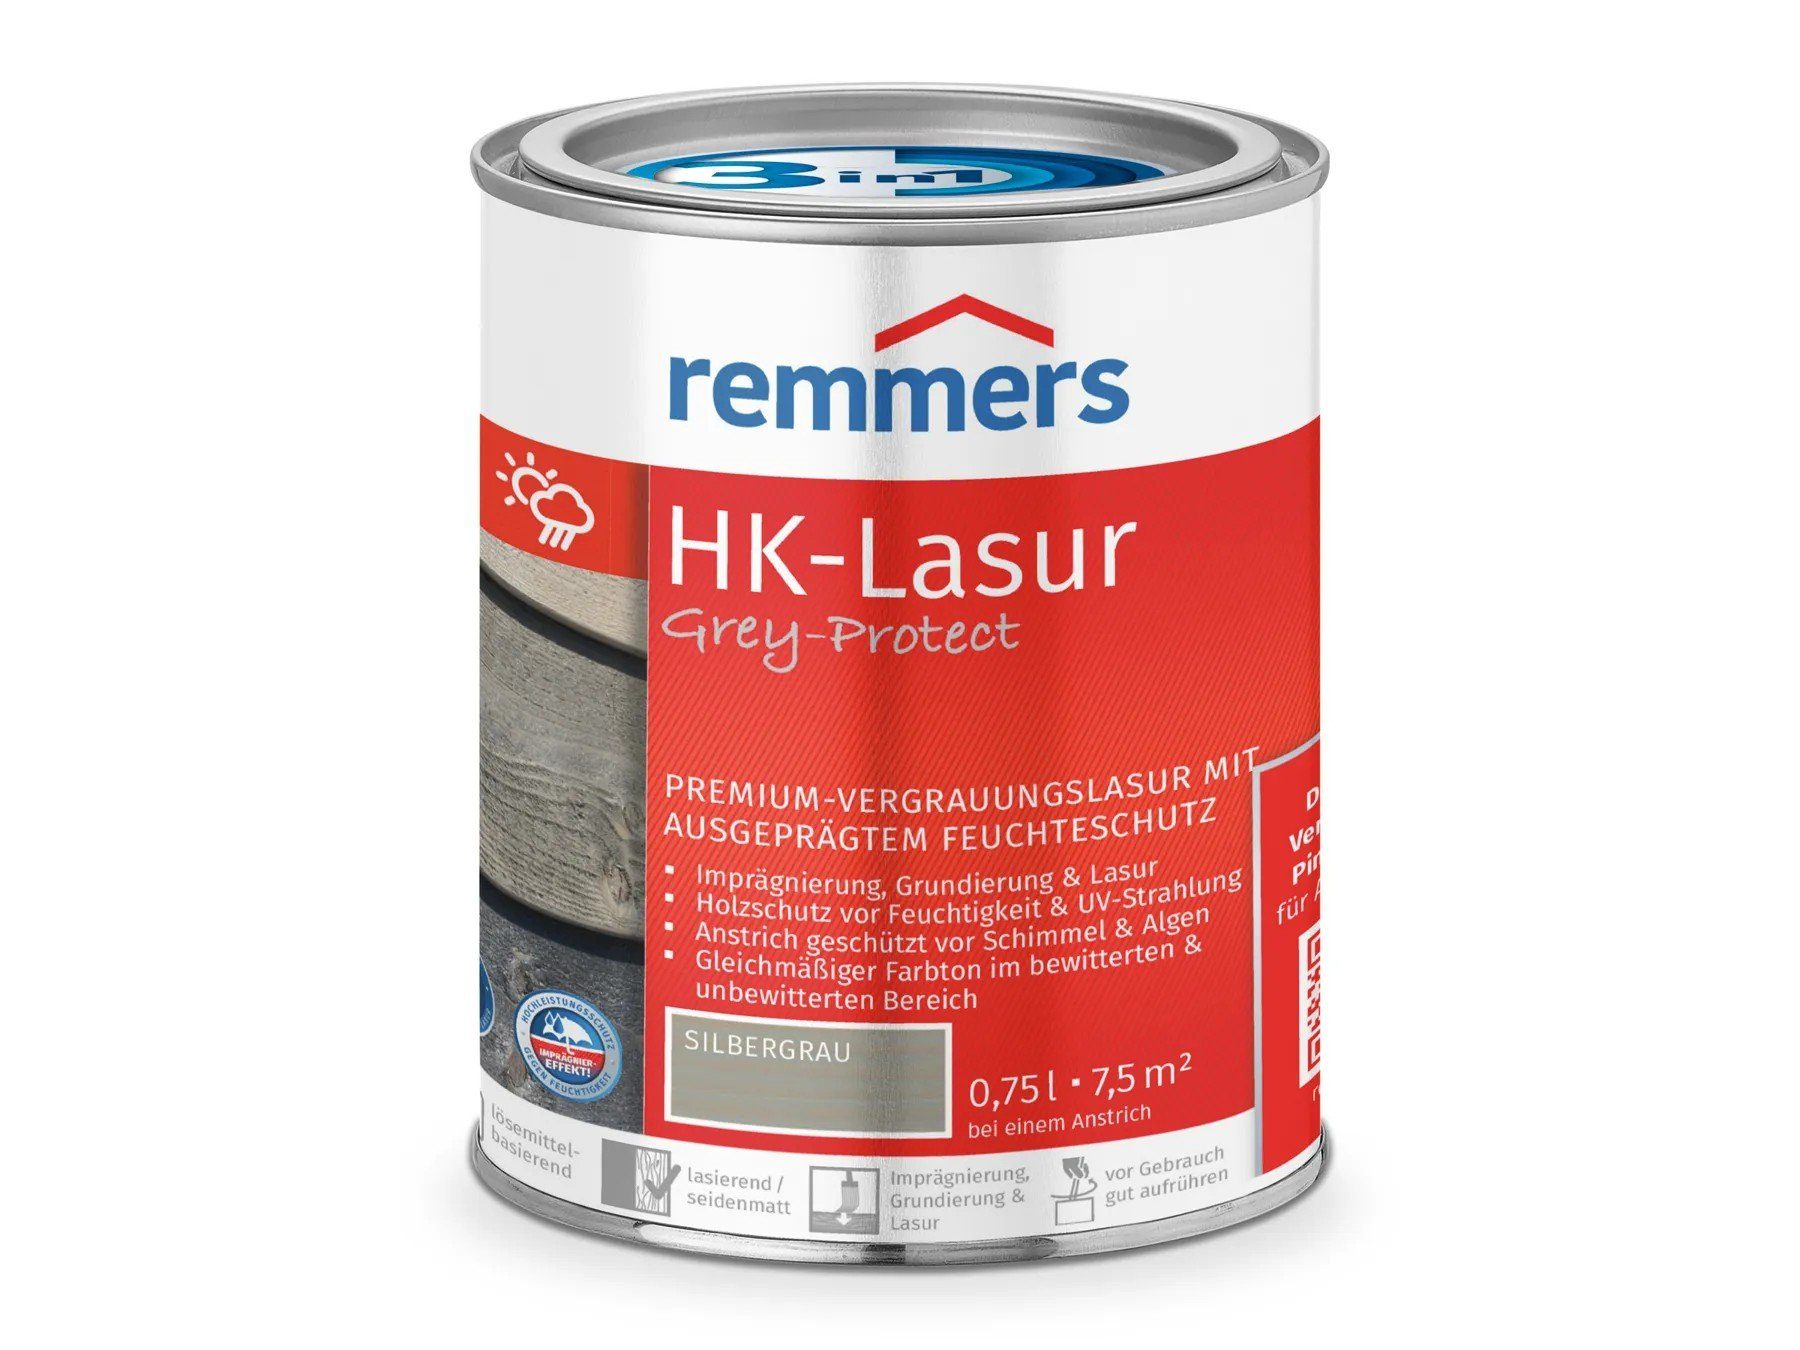 Remmers Holzschutzlasur HK-Lasur 3in1 Grey-Protect silbergrau (RC-970)